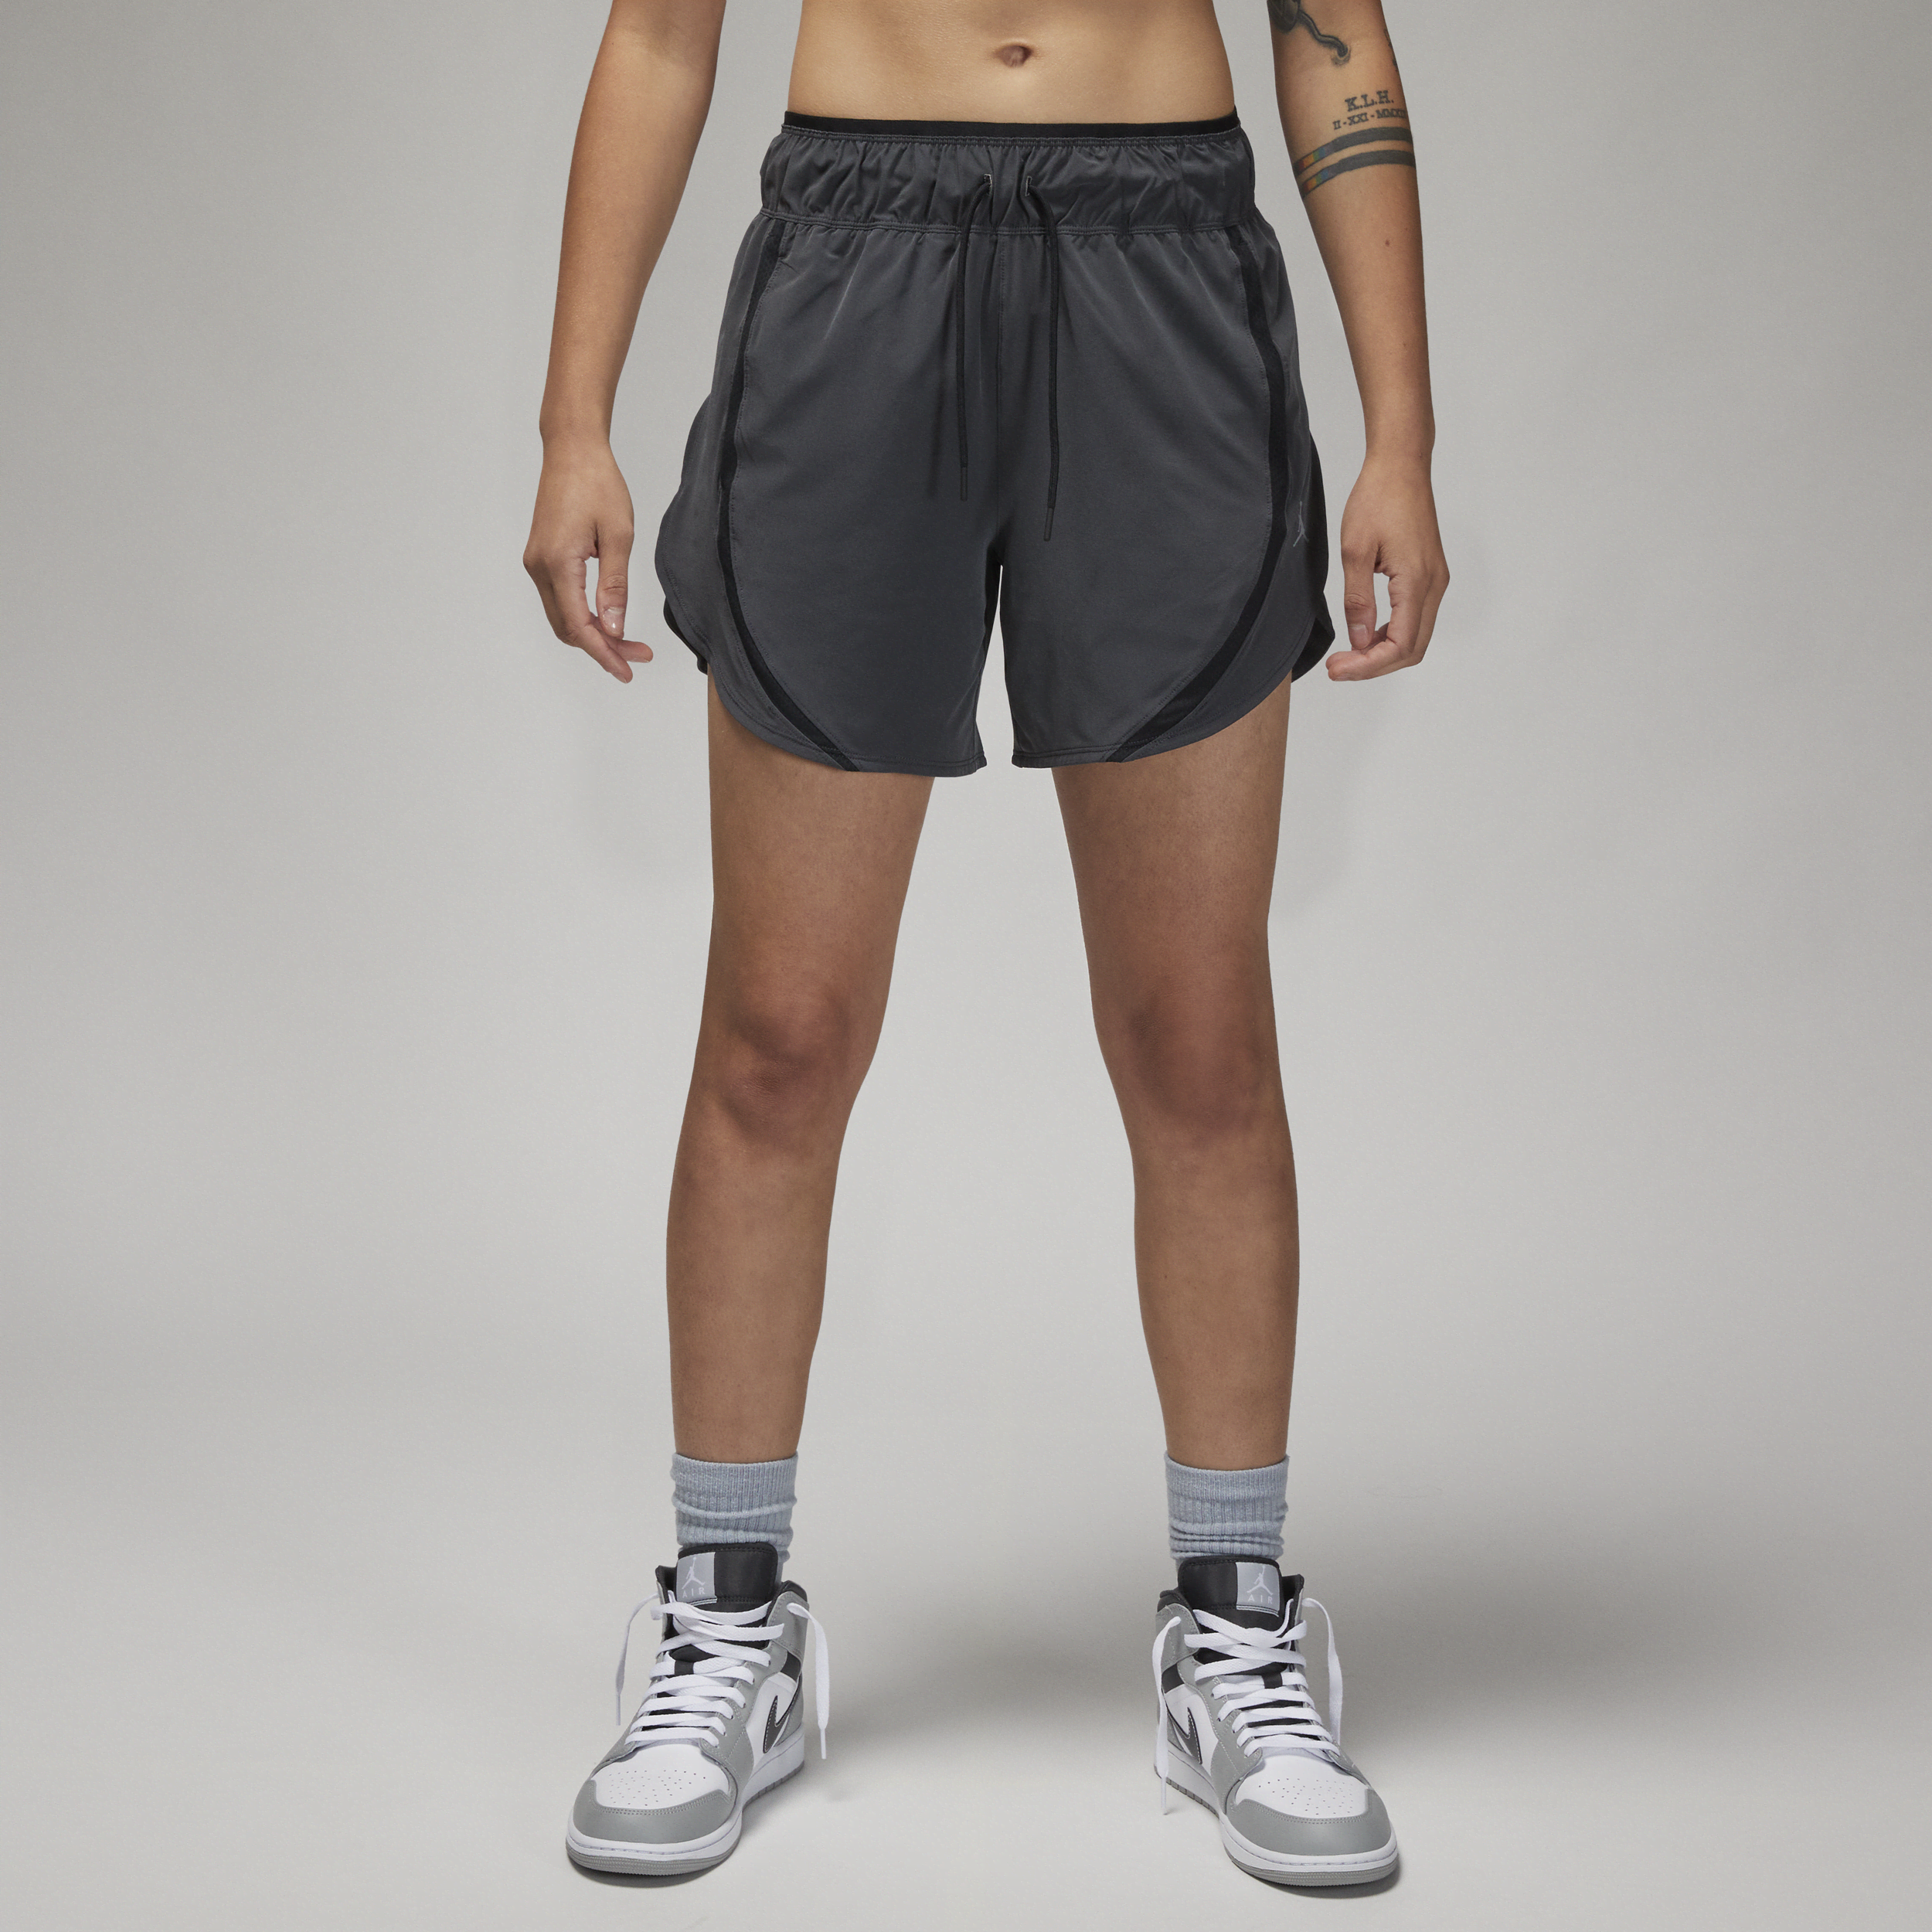 Jordan Sport Pantalón corto - Mujer - Negro